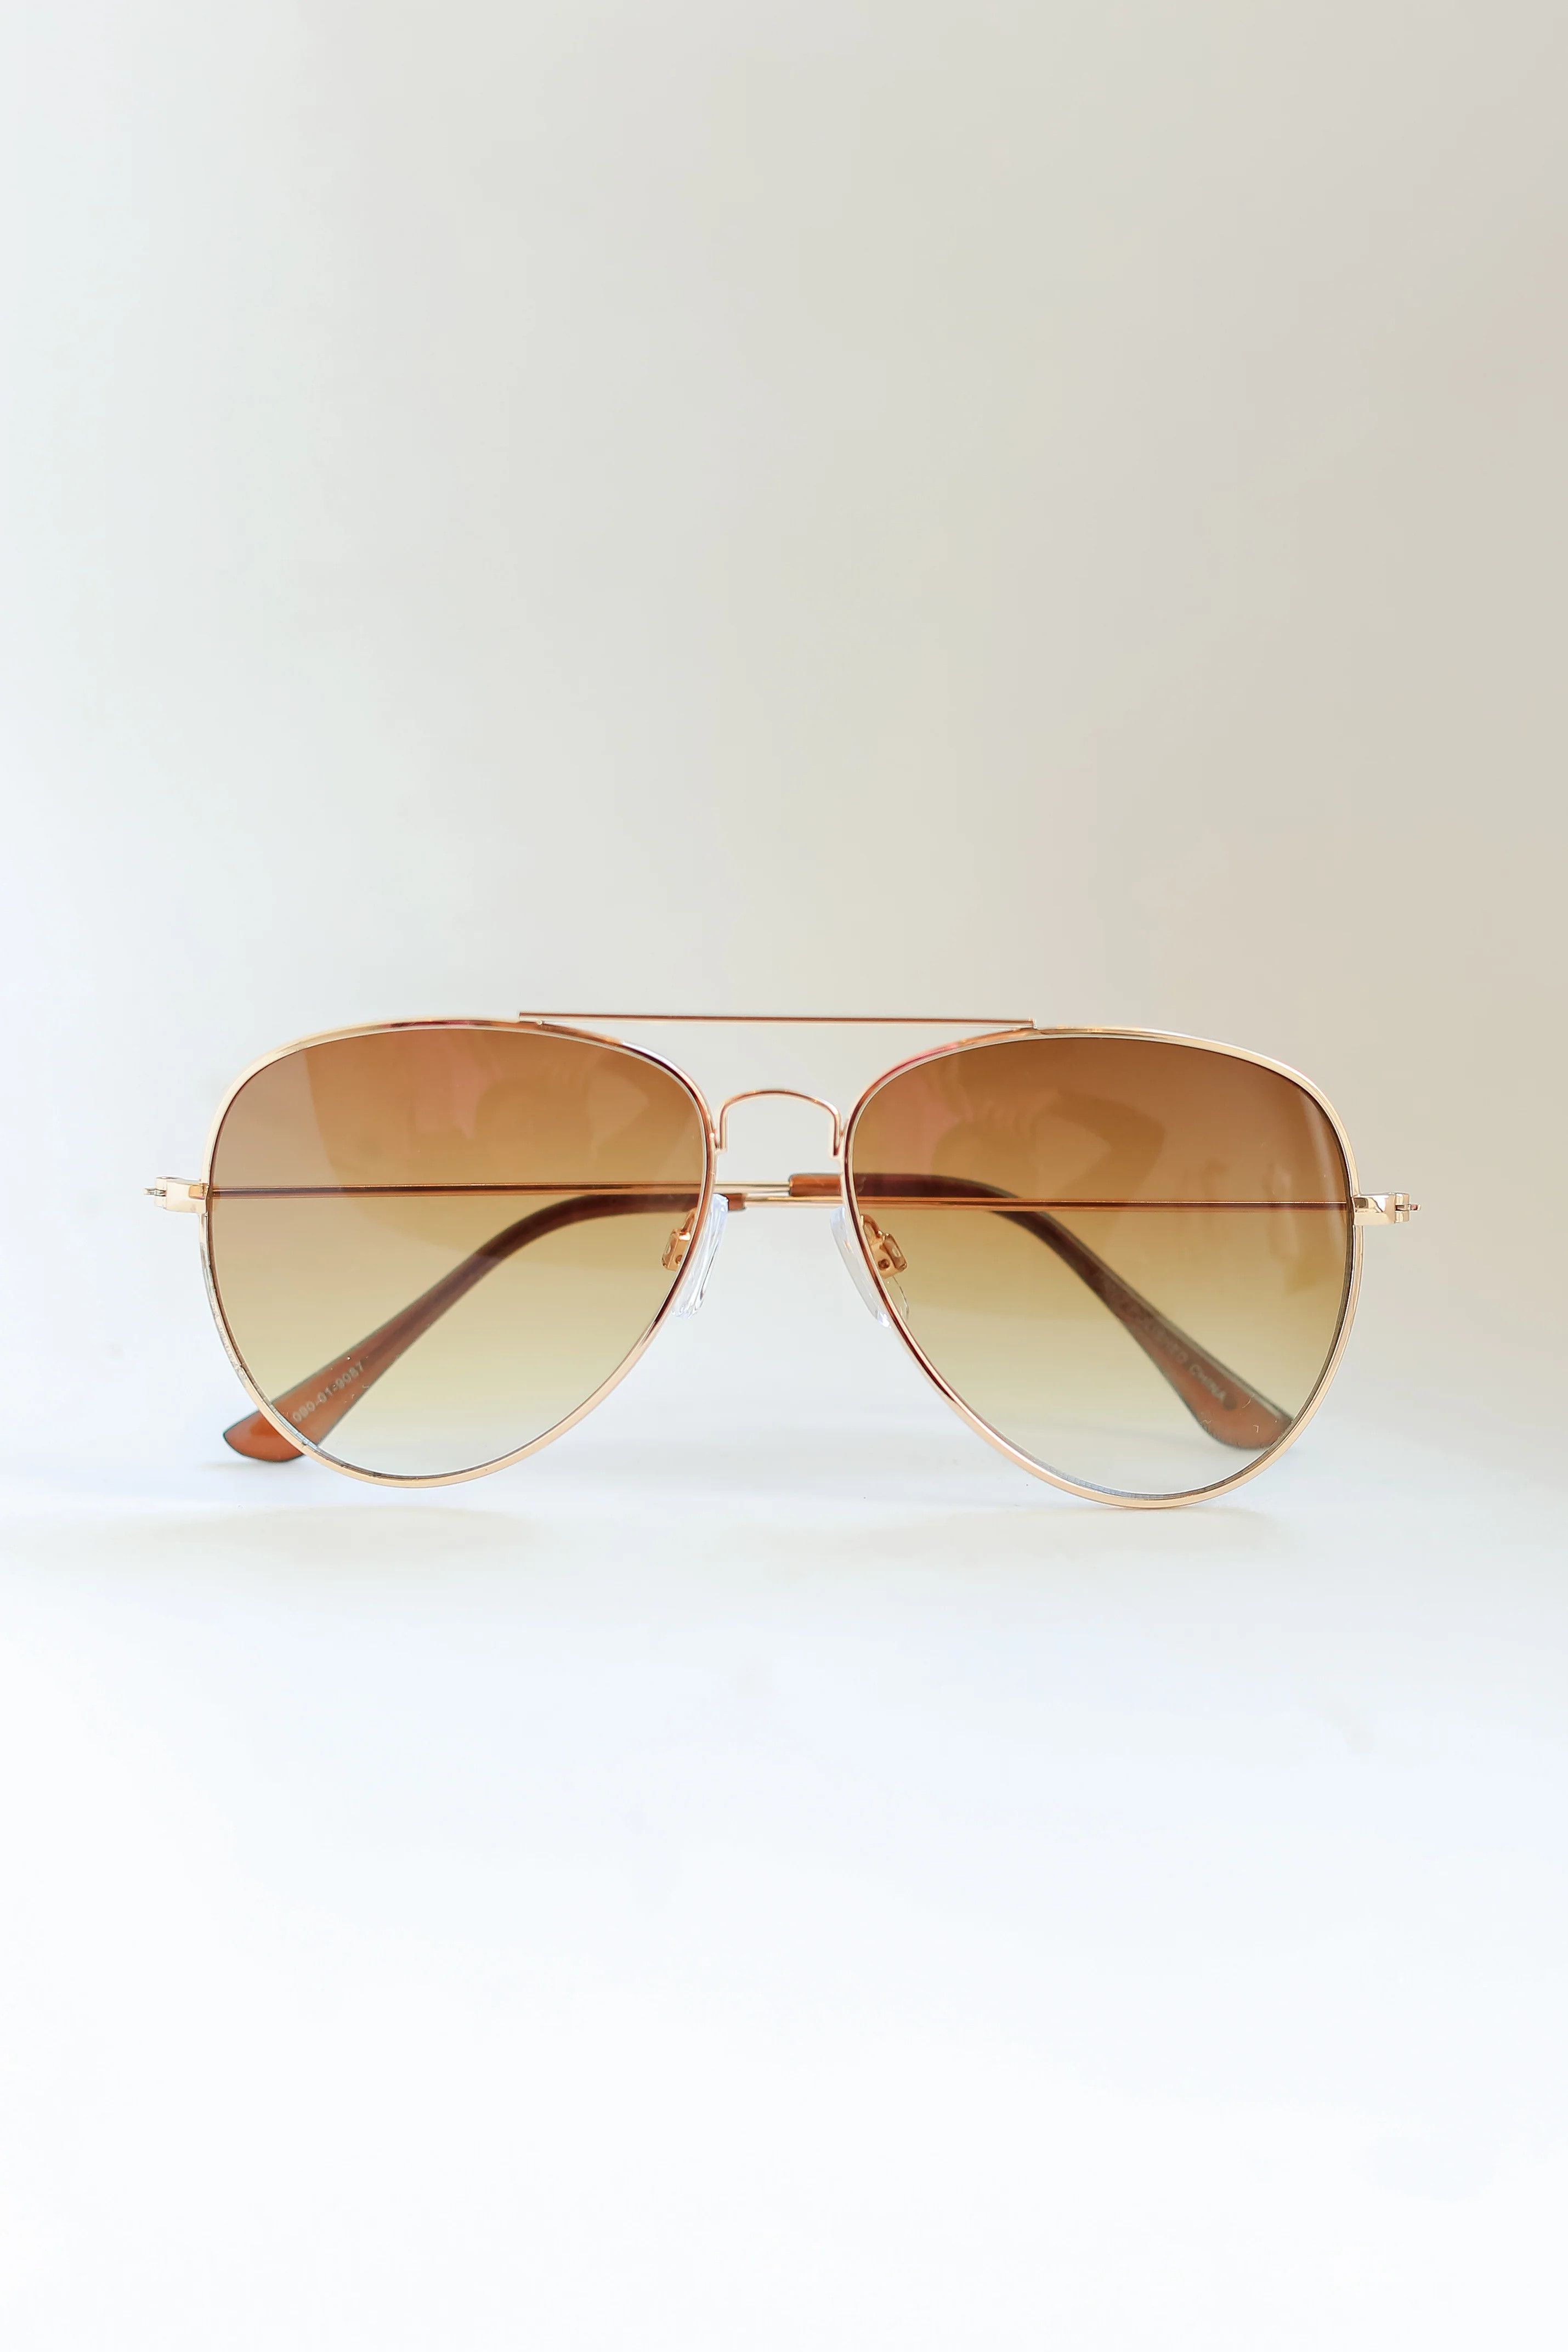 Totally Too Cool Aviator Sunglasses | Dress Up